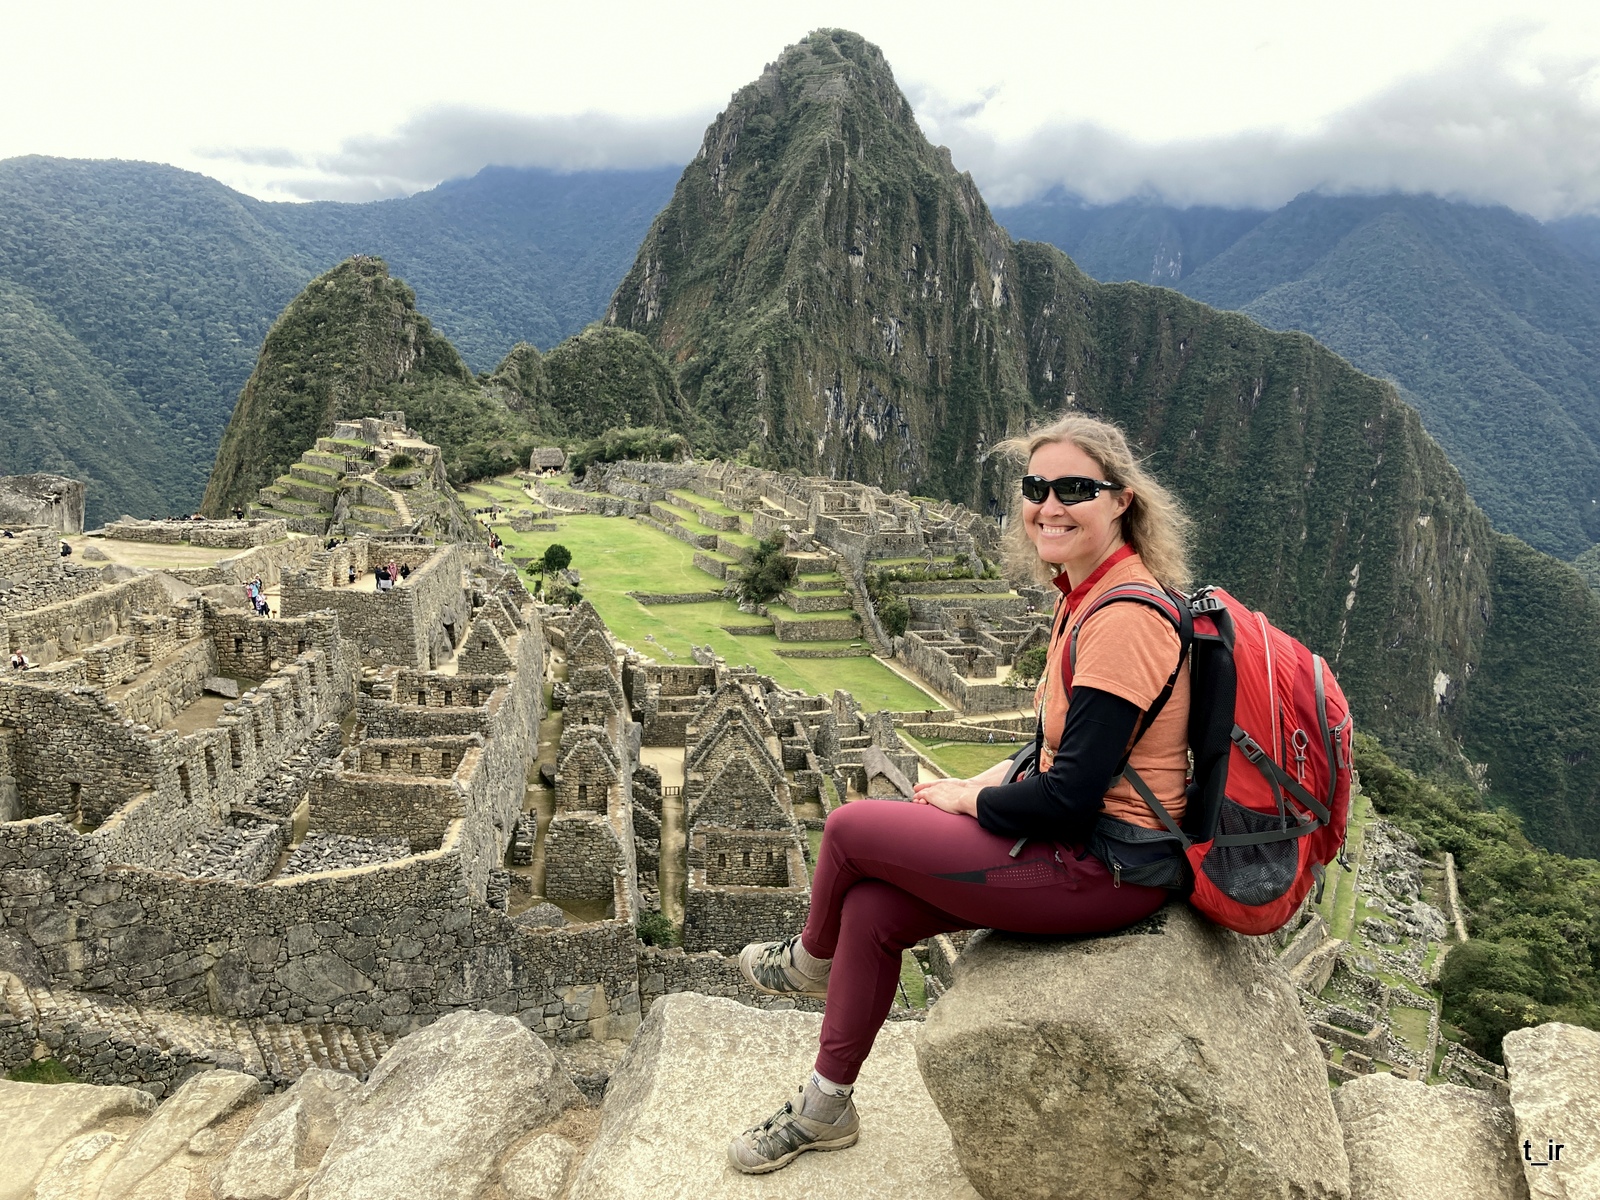 Tanya at Machu Picchu, Peru after a 5-day Salkantay trek. August 2022